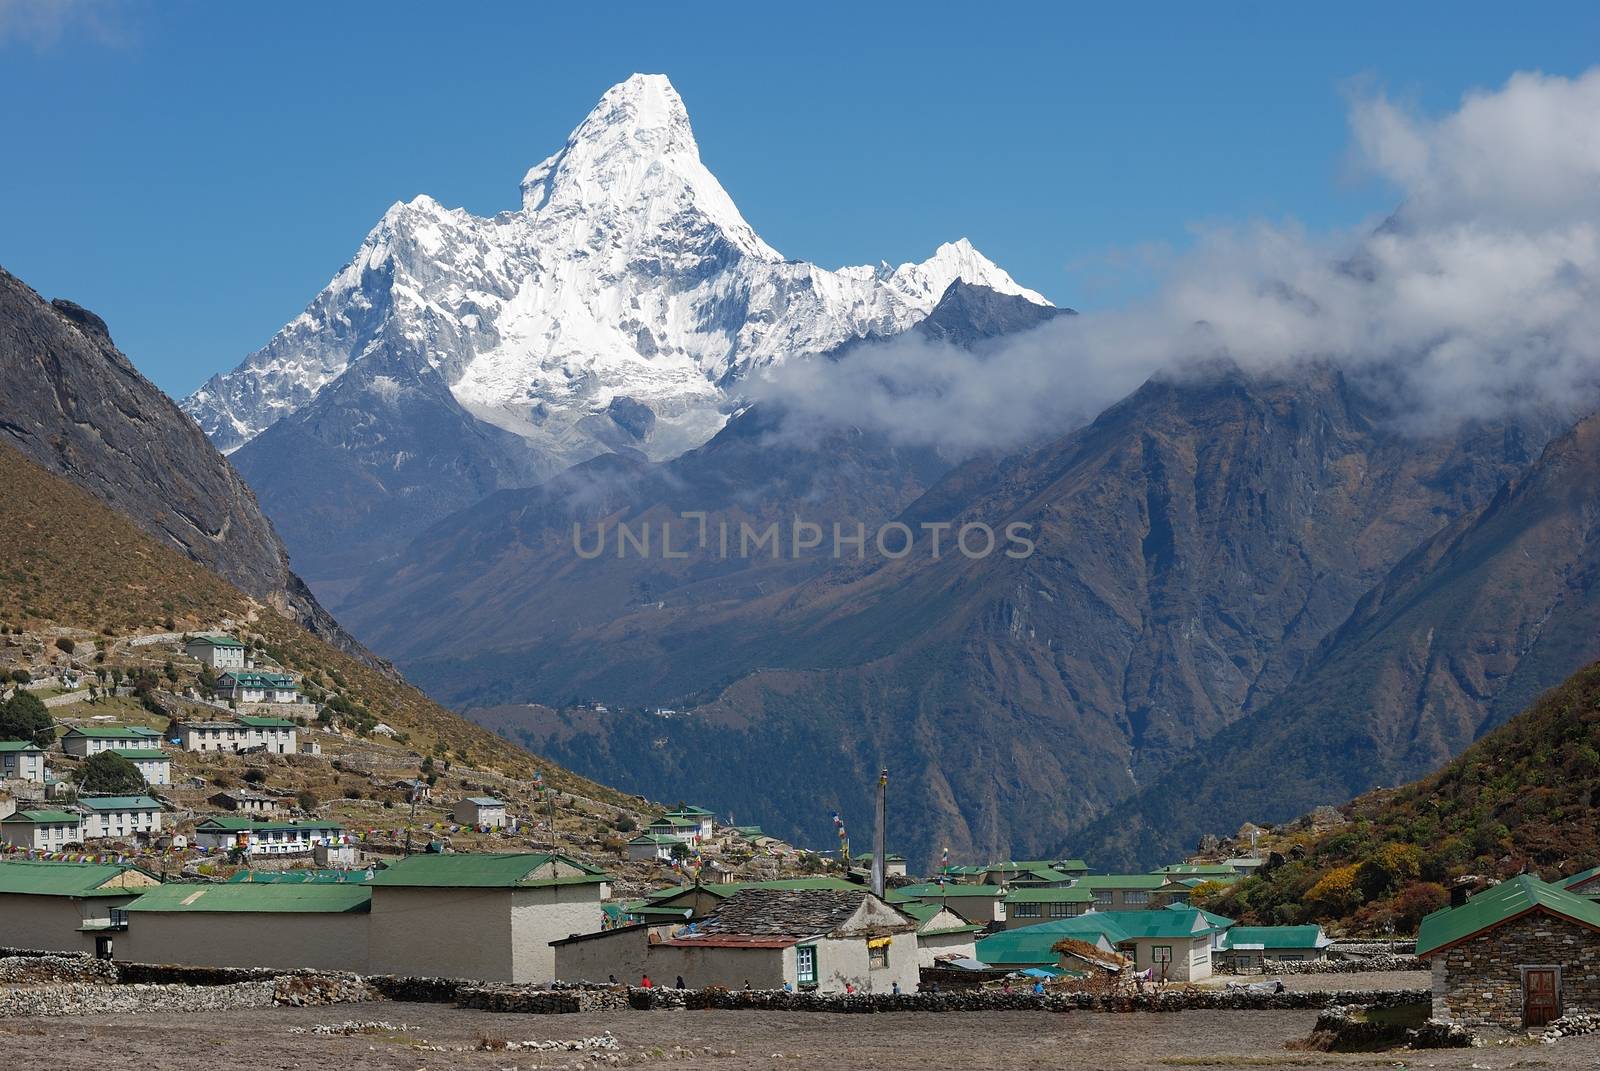 Khumjung village and Ama Dablam (6814 m) peak in Nepal Sagarmatha area